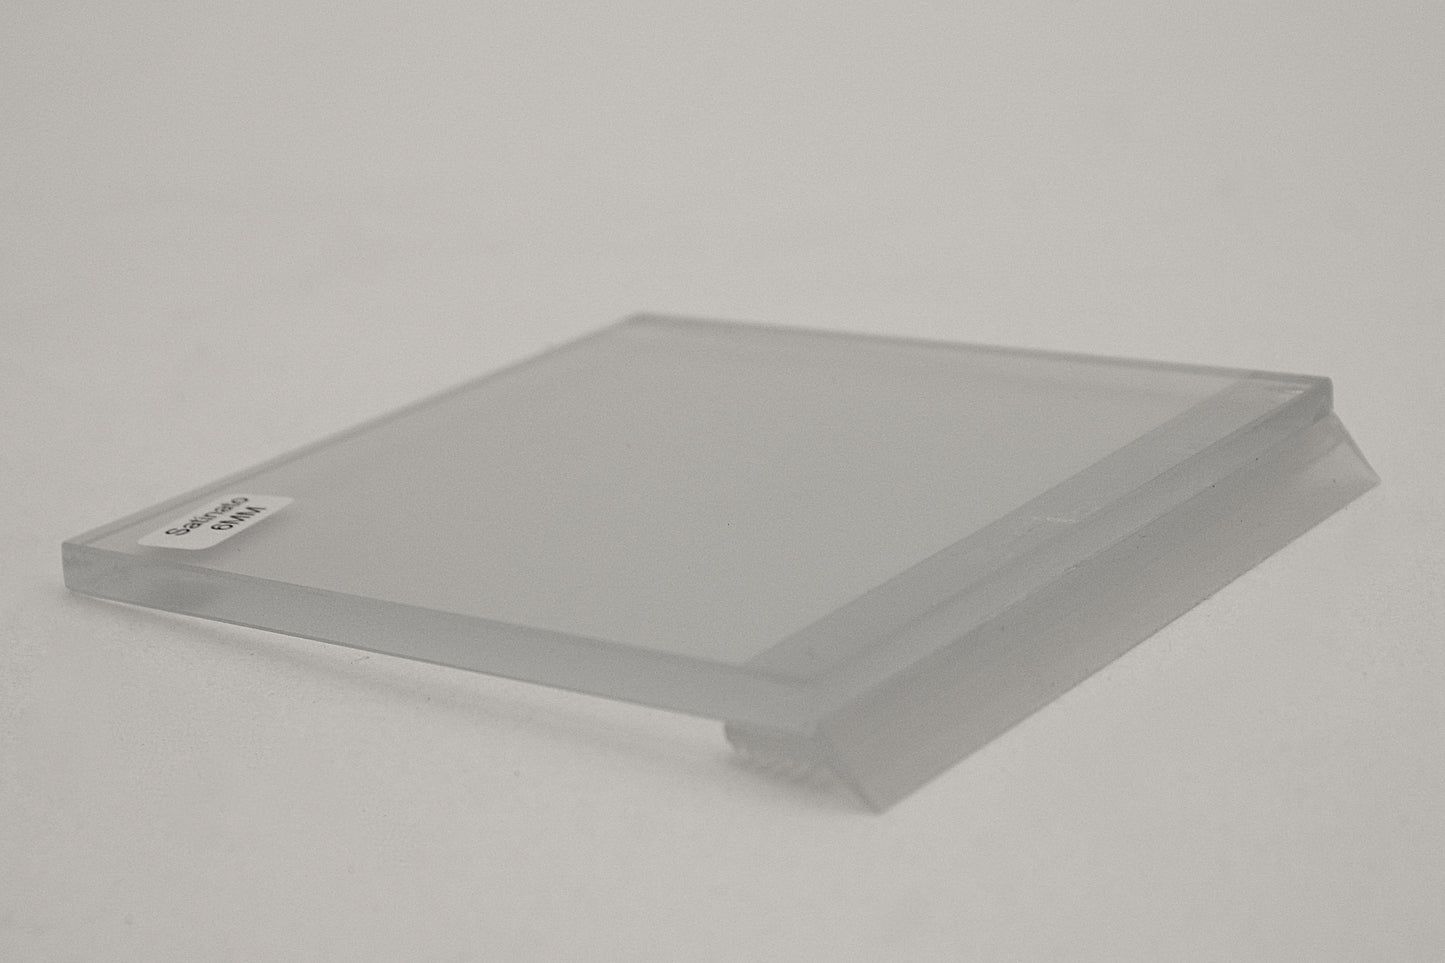 Schutzlippe Glasplatte Kaminofen Silikonabdichtung 5m